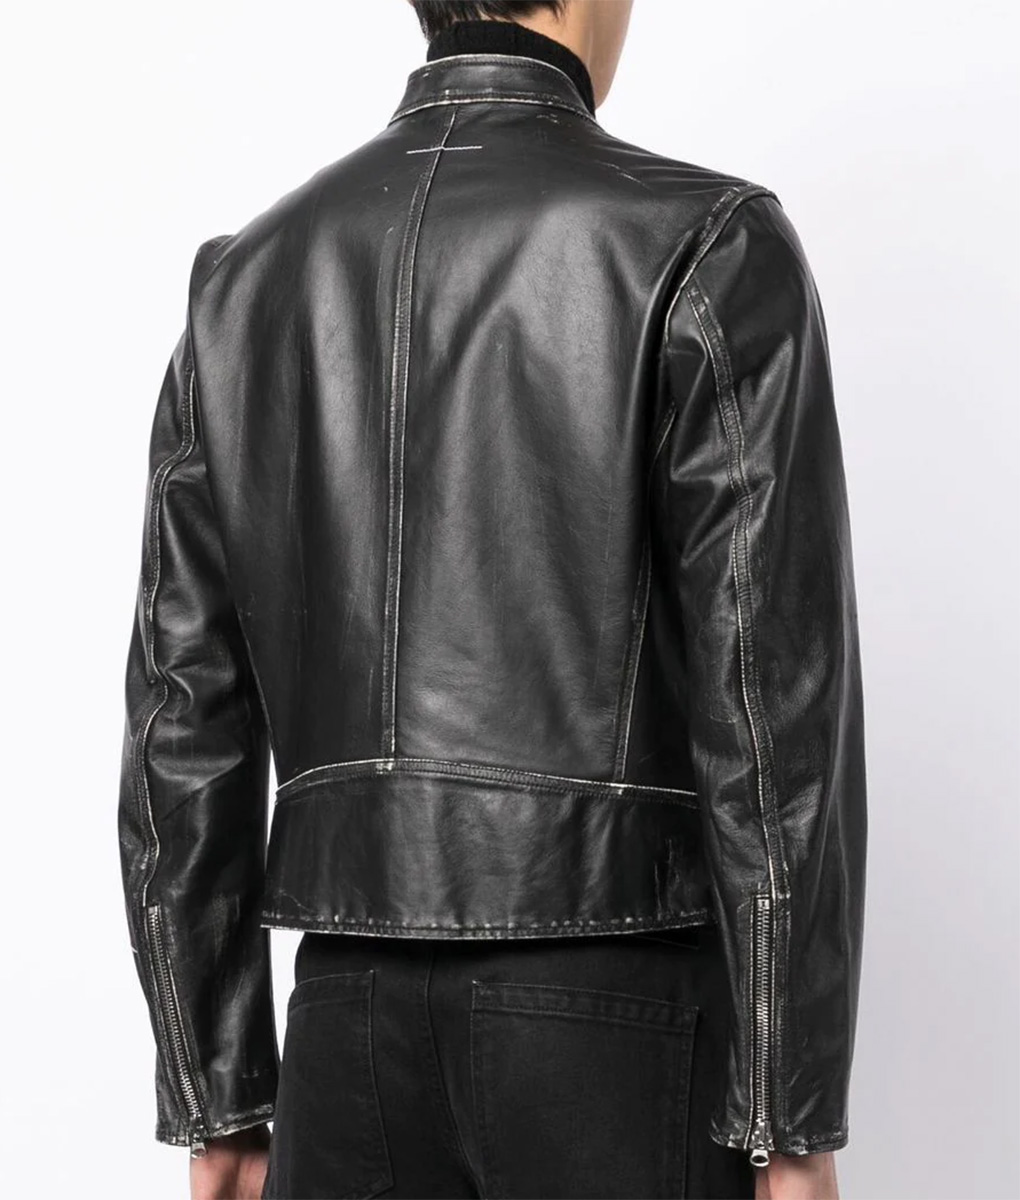 Jimin Black Leather Jacket